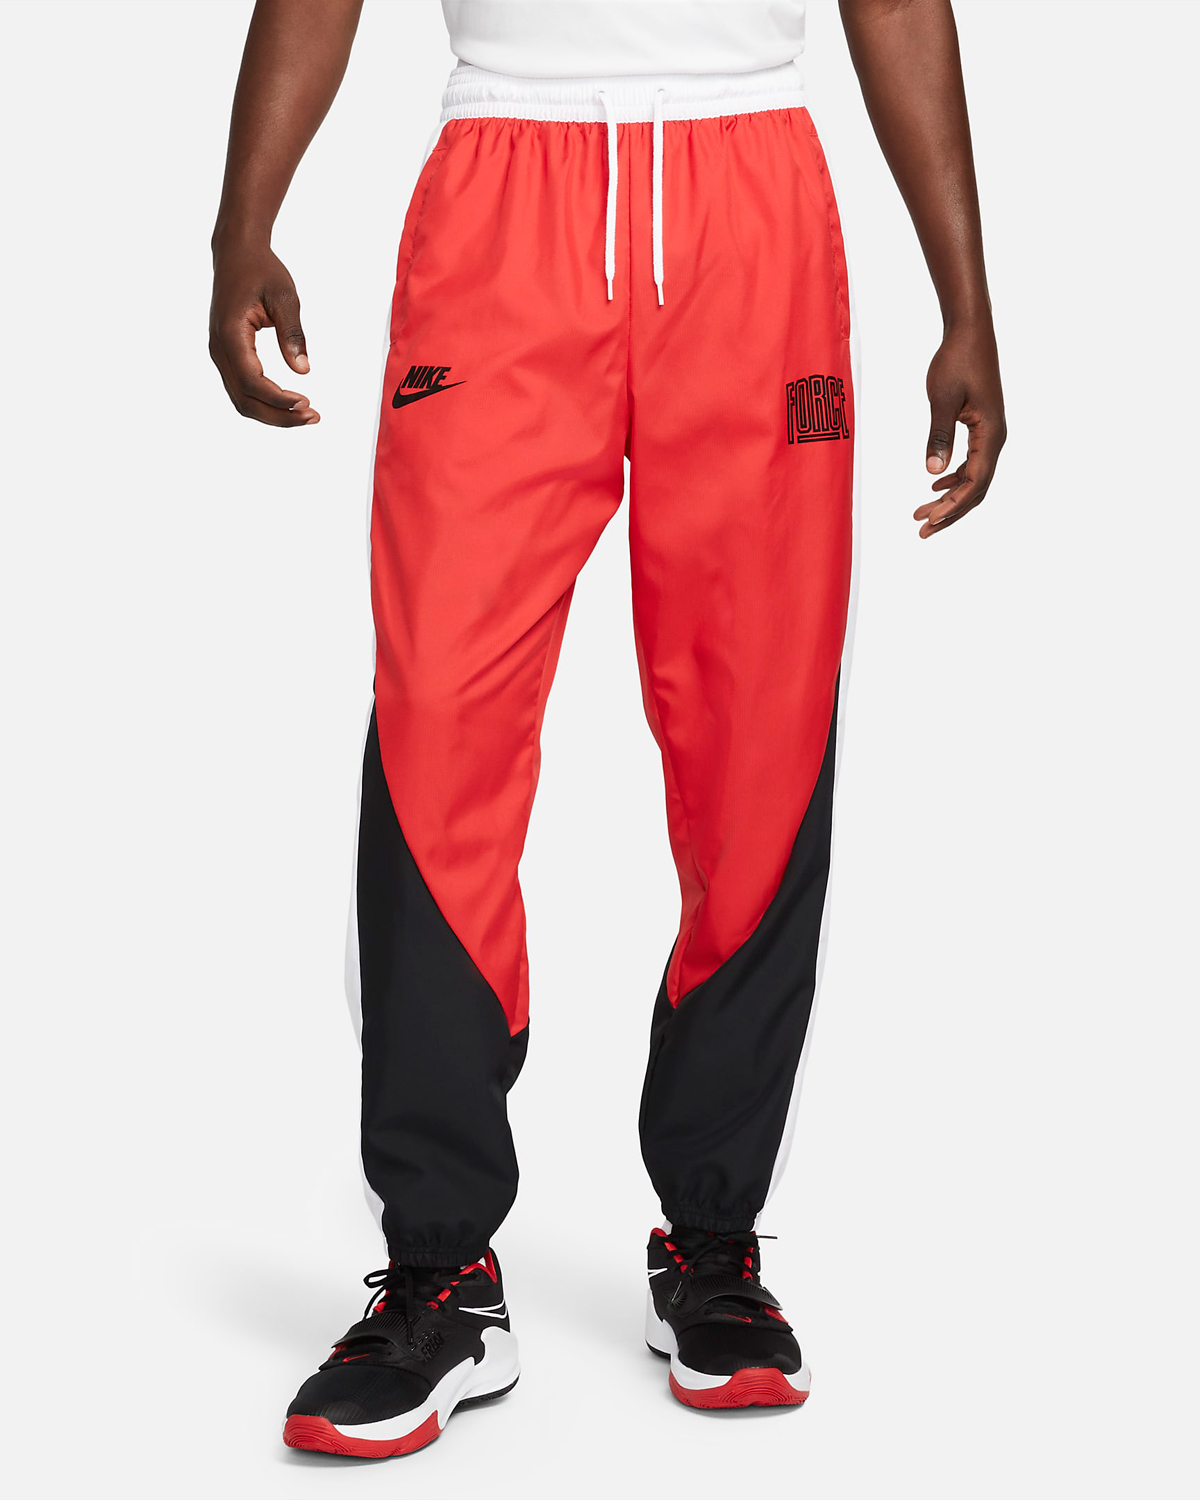 Nike-Starting-5-Basketball-Pants-University-Red-Black